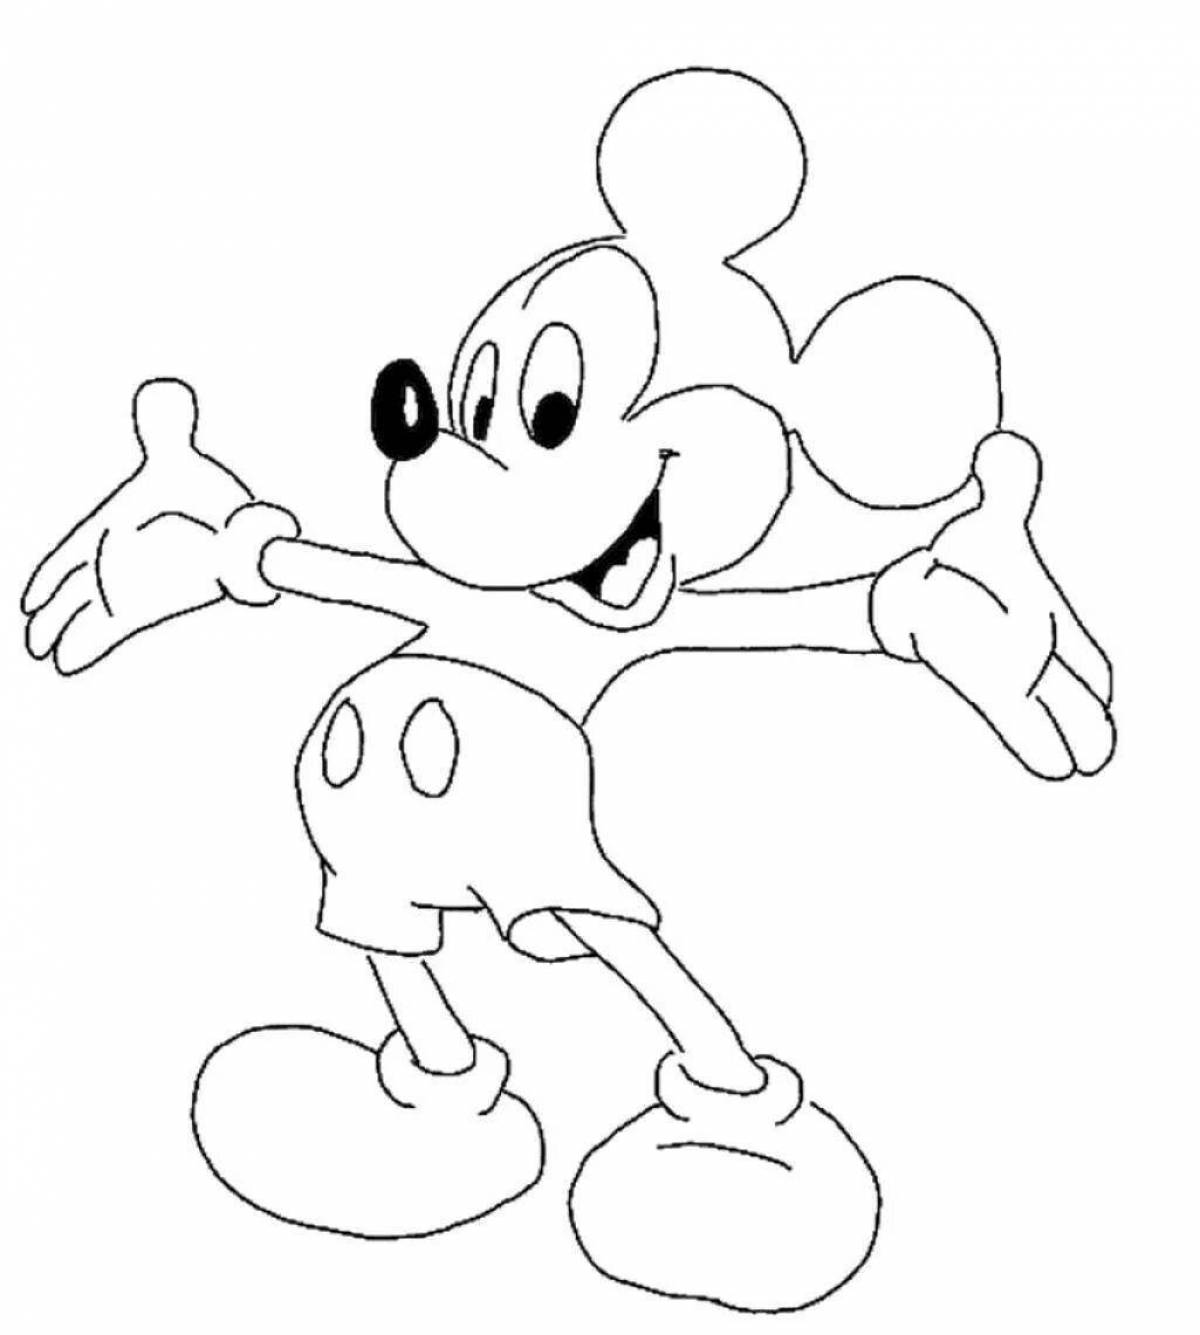 Cartoon mouse #2